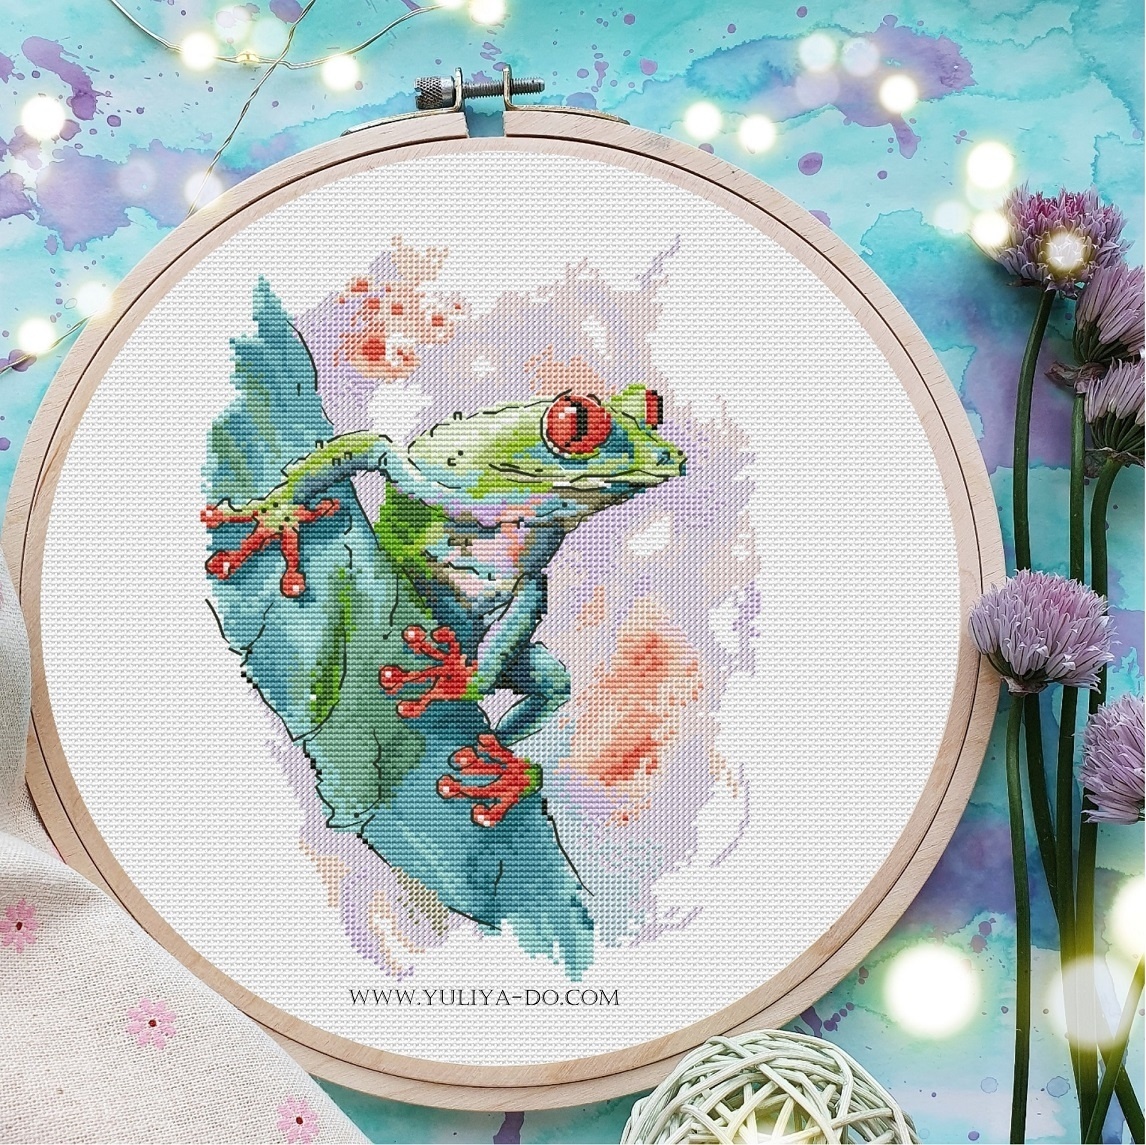 Tree Frog on a Lilac Background Cross Stitch Pattern фото 6